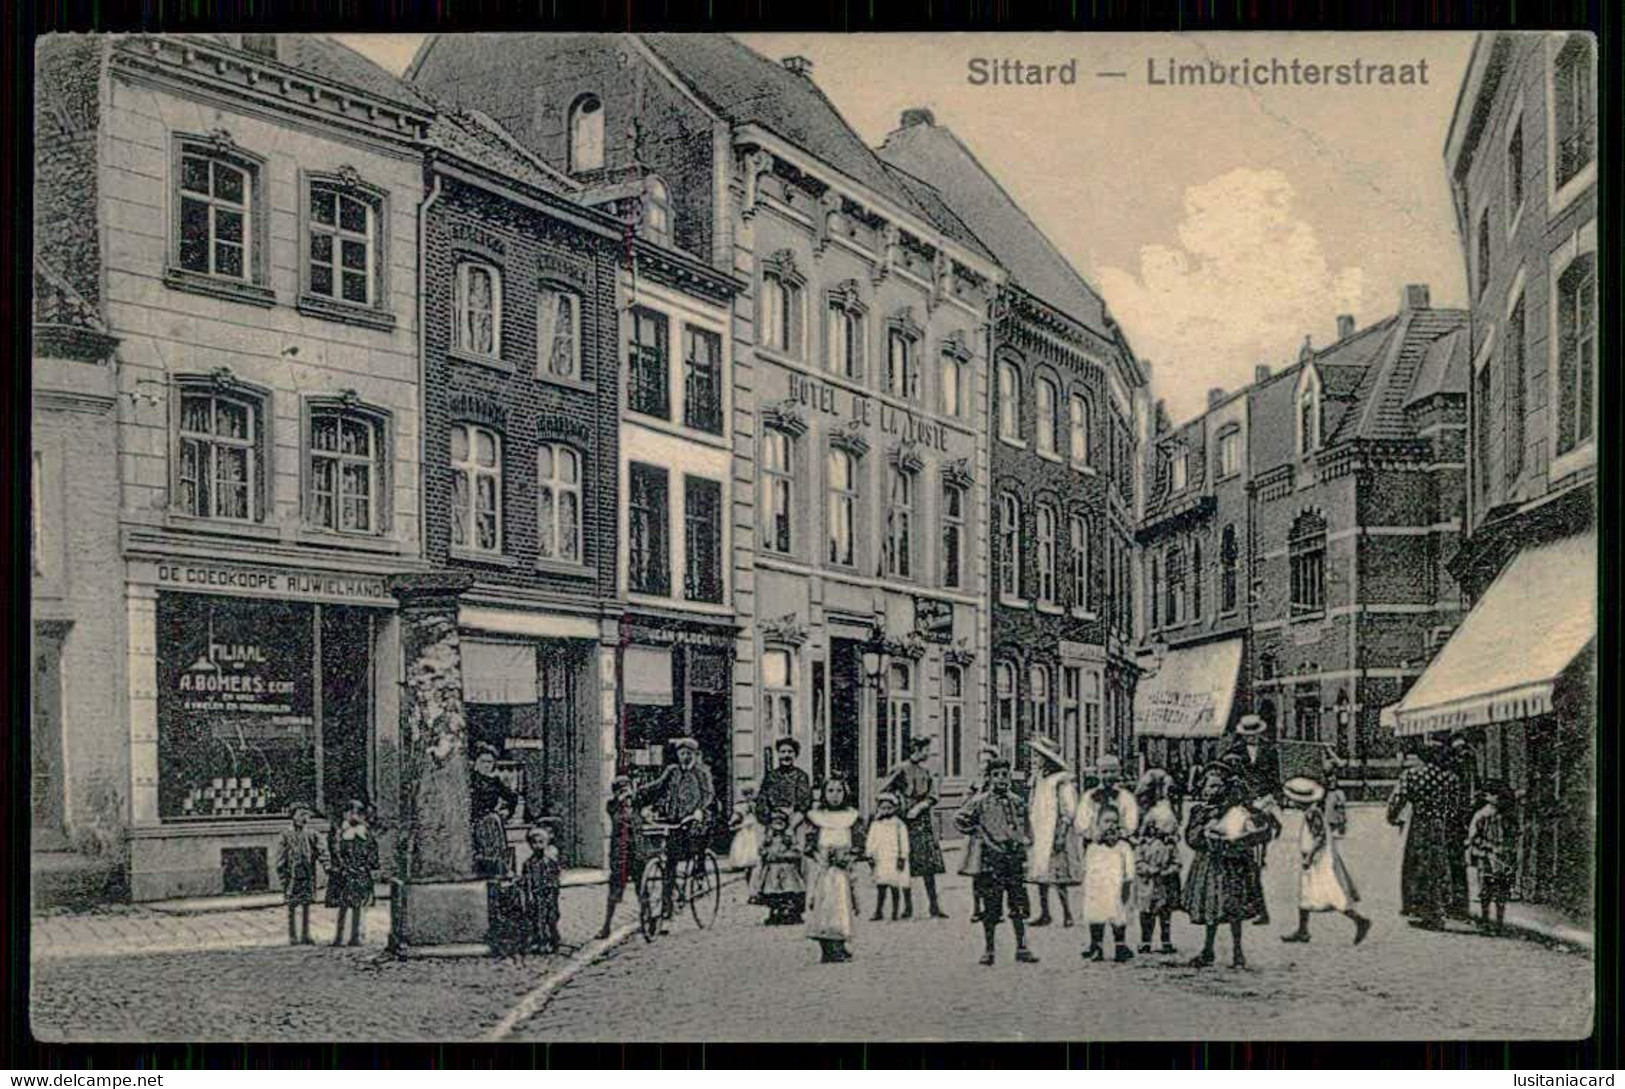 SITTARD - Limbrichterstraat. ( Nº 7676 12 E 66) Carte Postale - Sittard